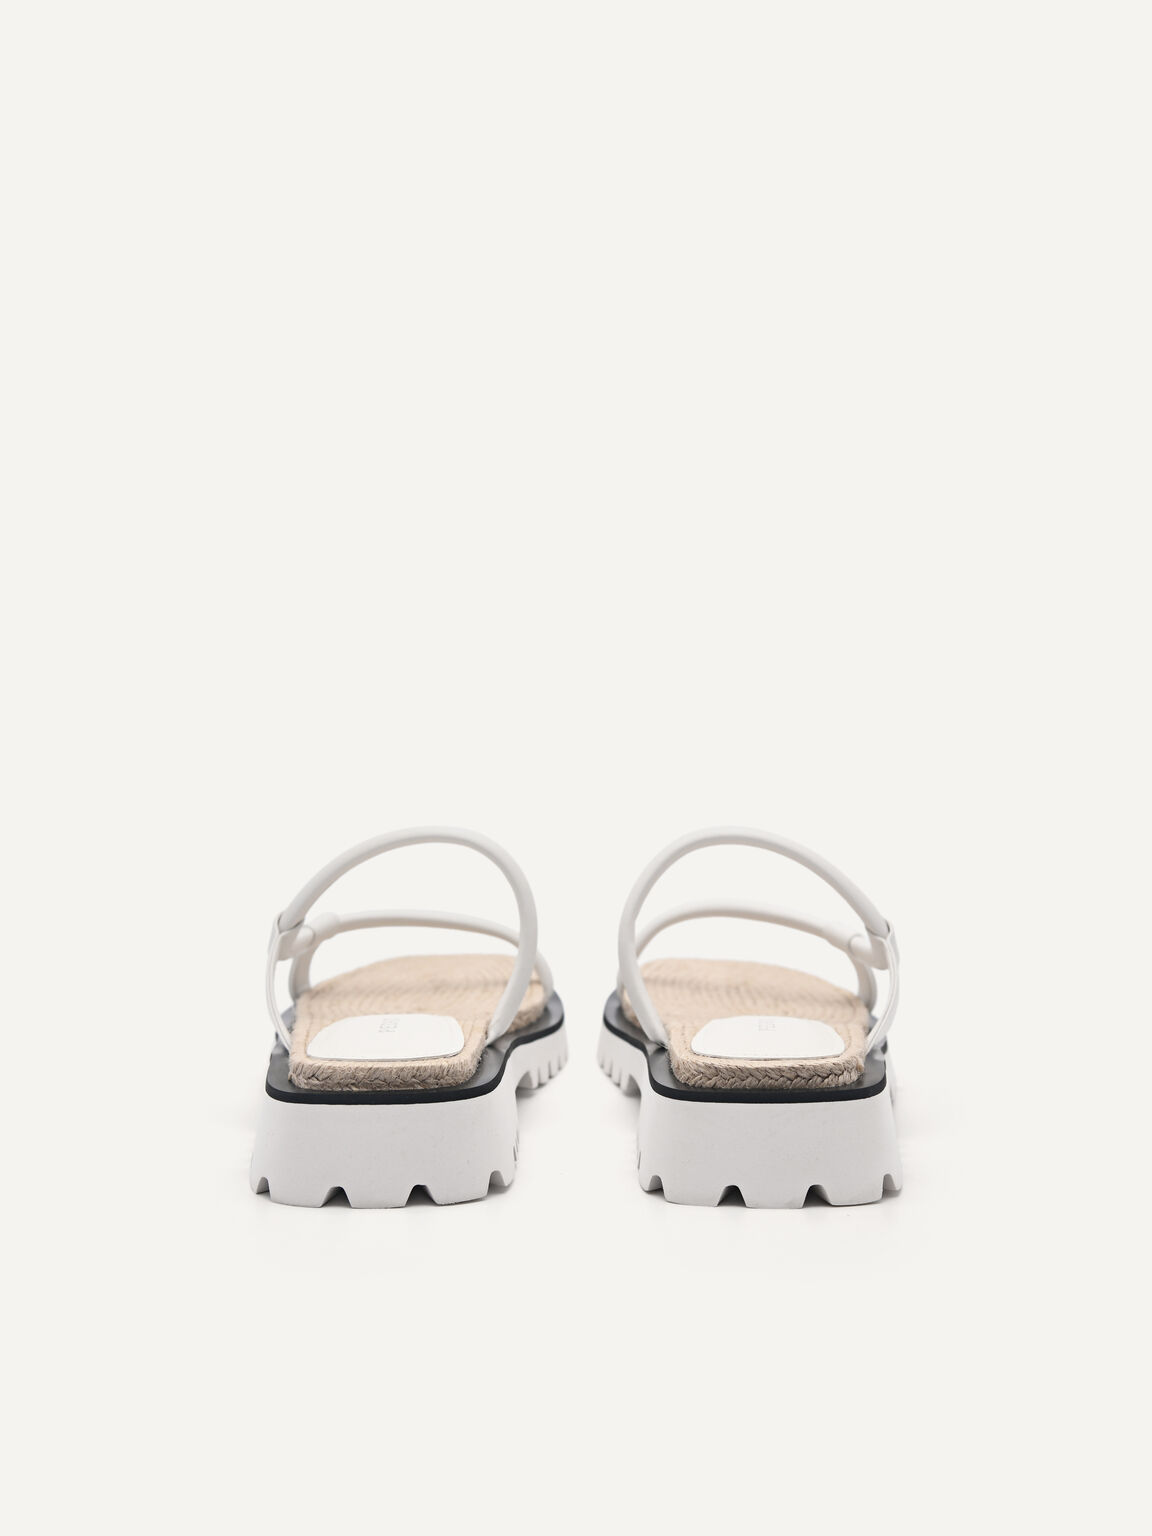 Woven Sandals, White